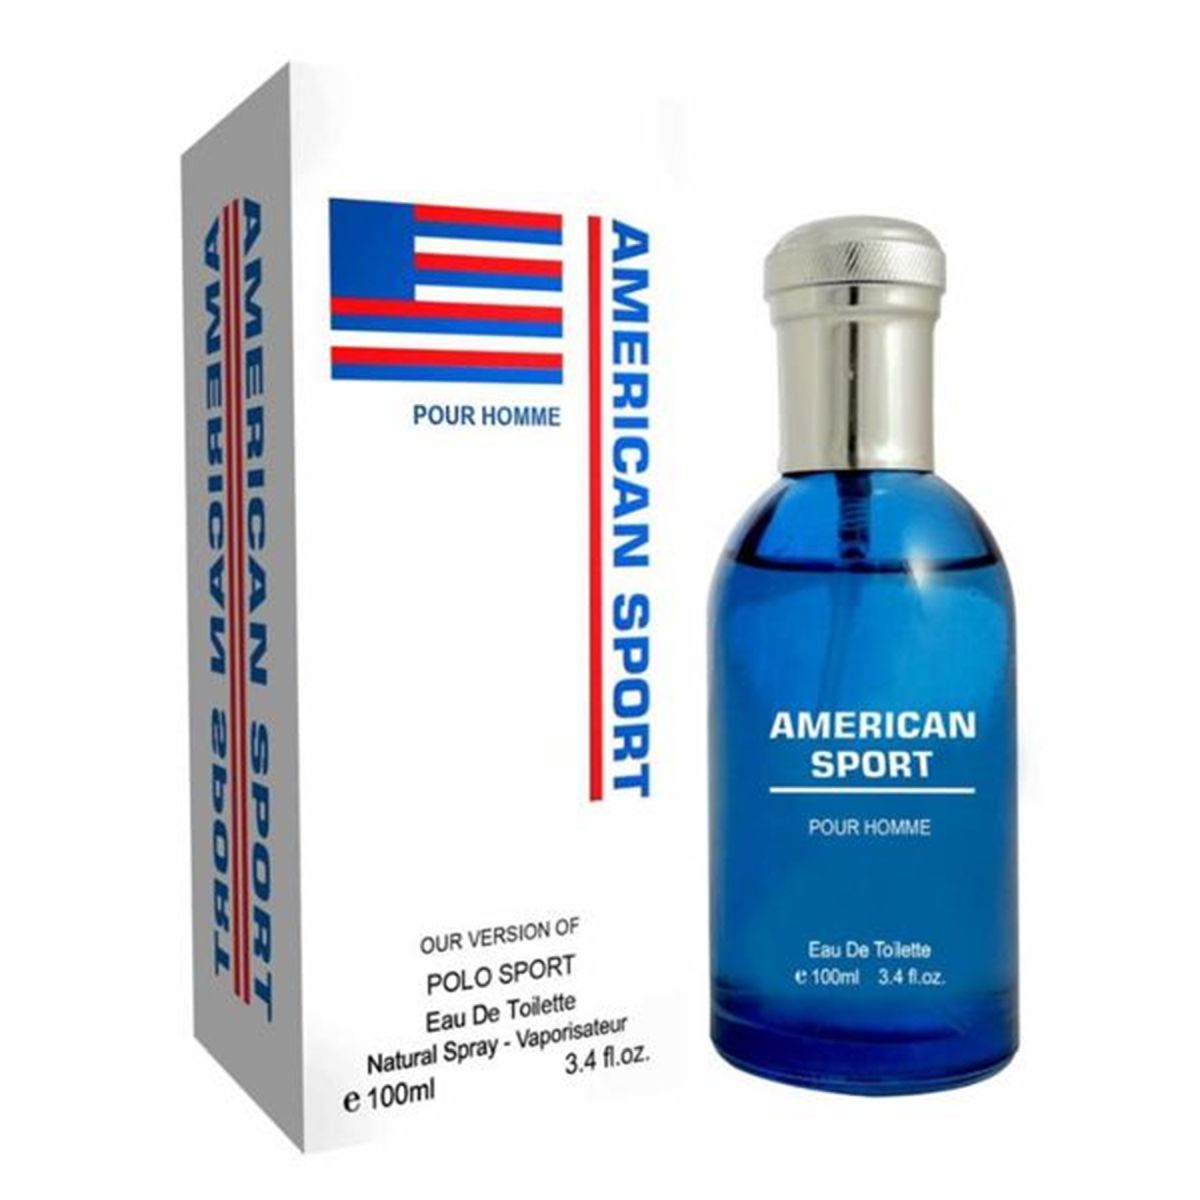 American Sport – Polo Sport Pour Homme, Version, Type, Alternative,  Impression - CheapoGood